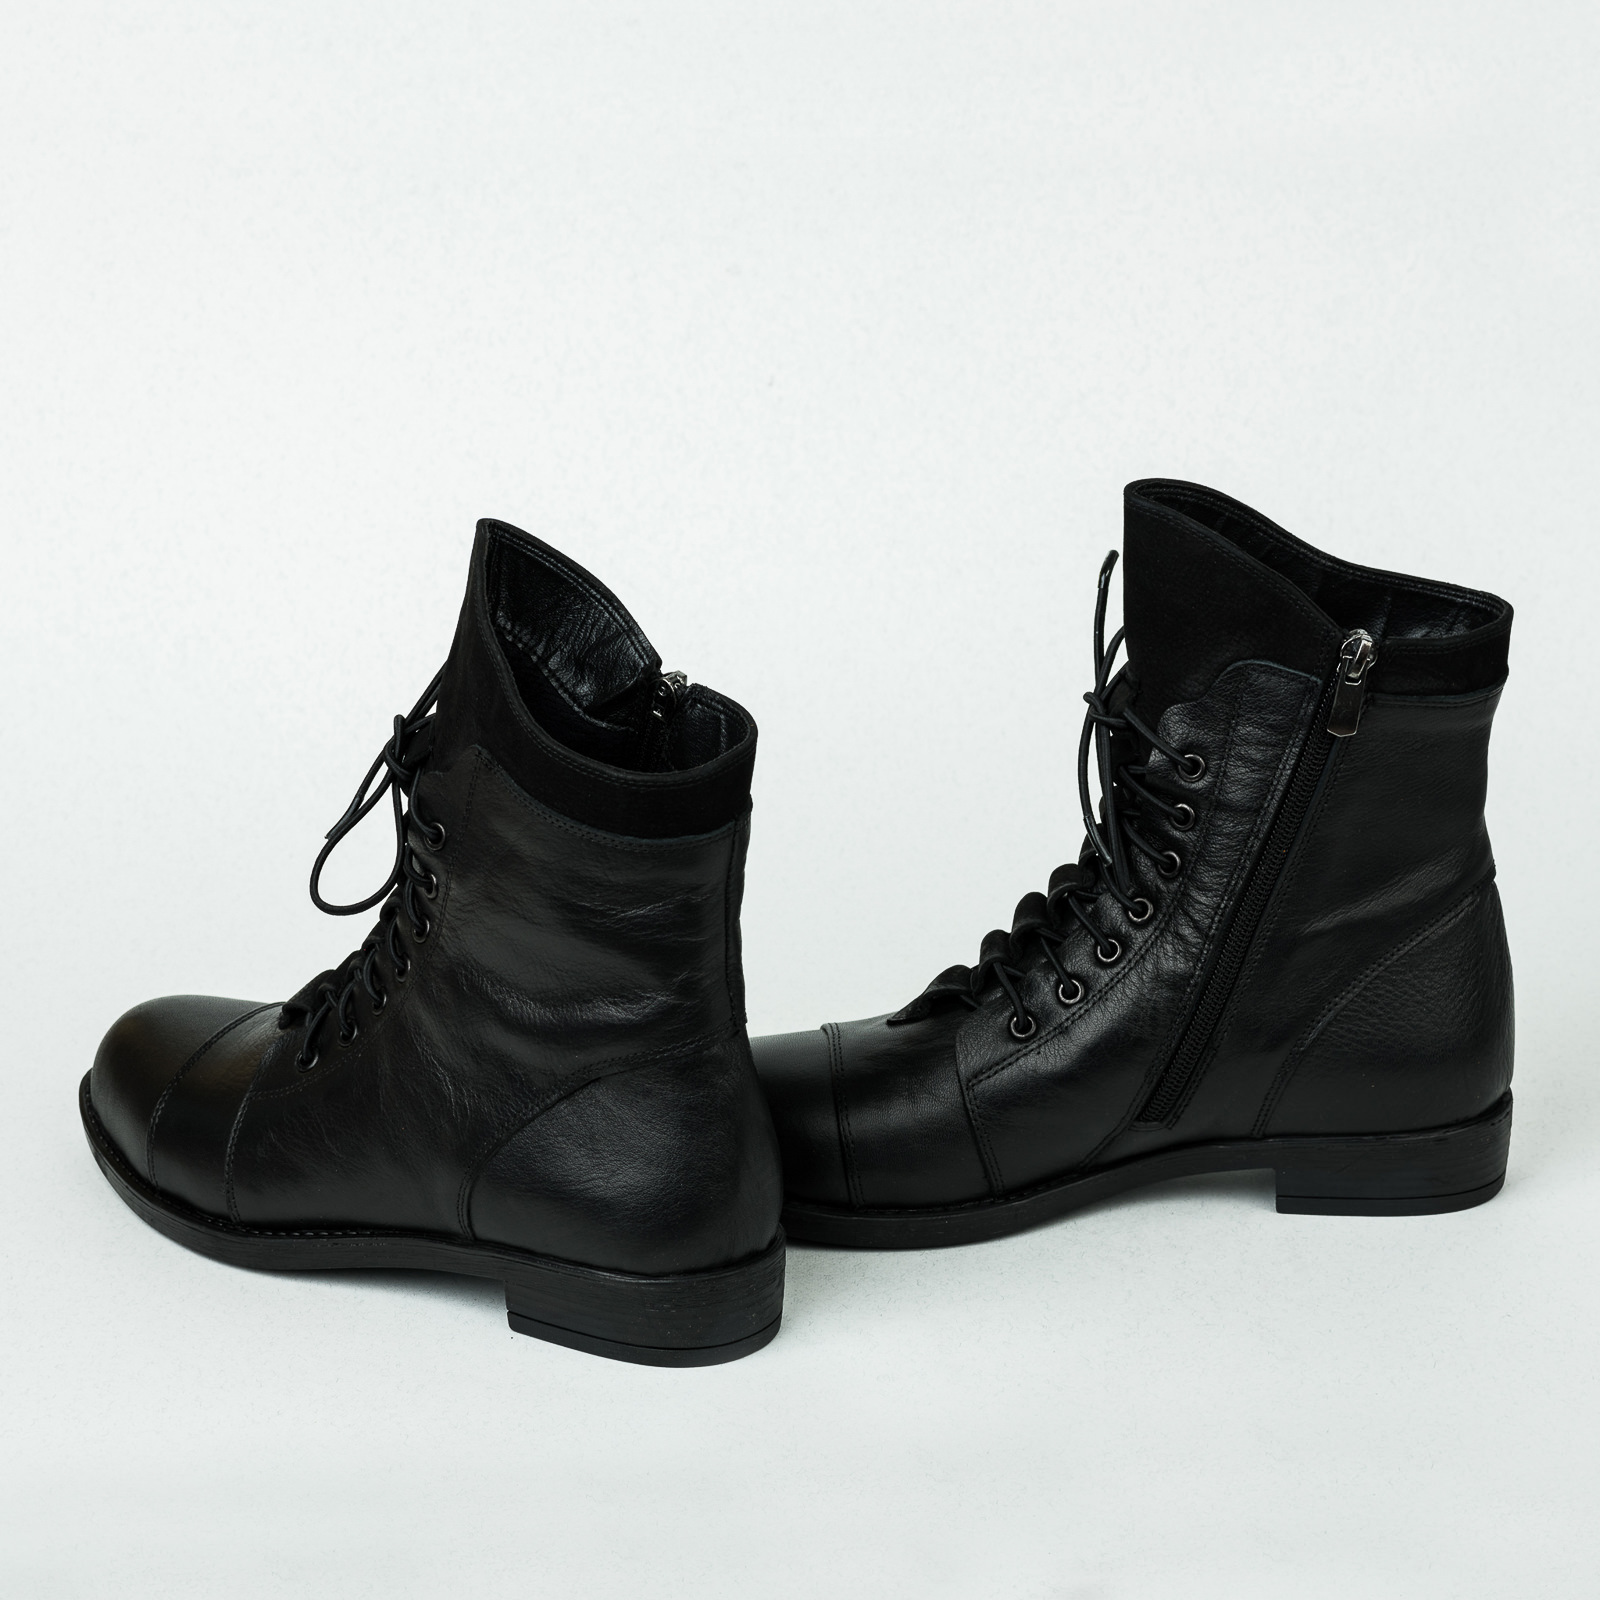 Leather booties B245 - BLACK